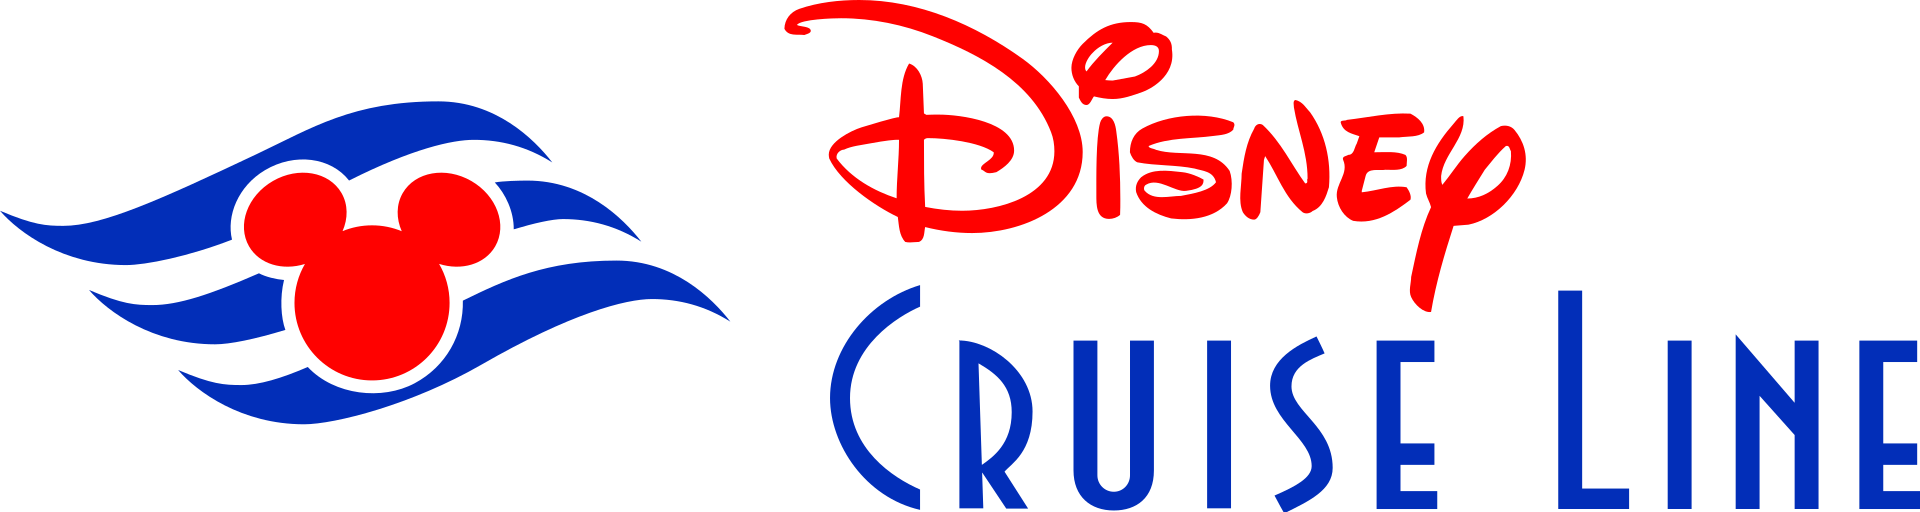 disney fantasy cruise logo